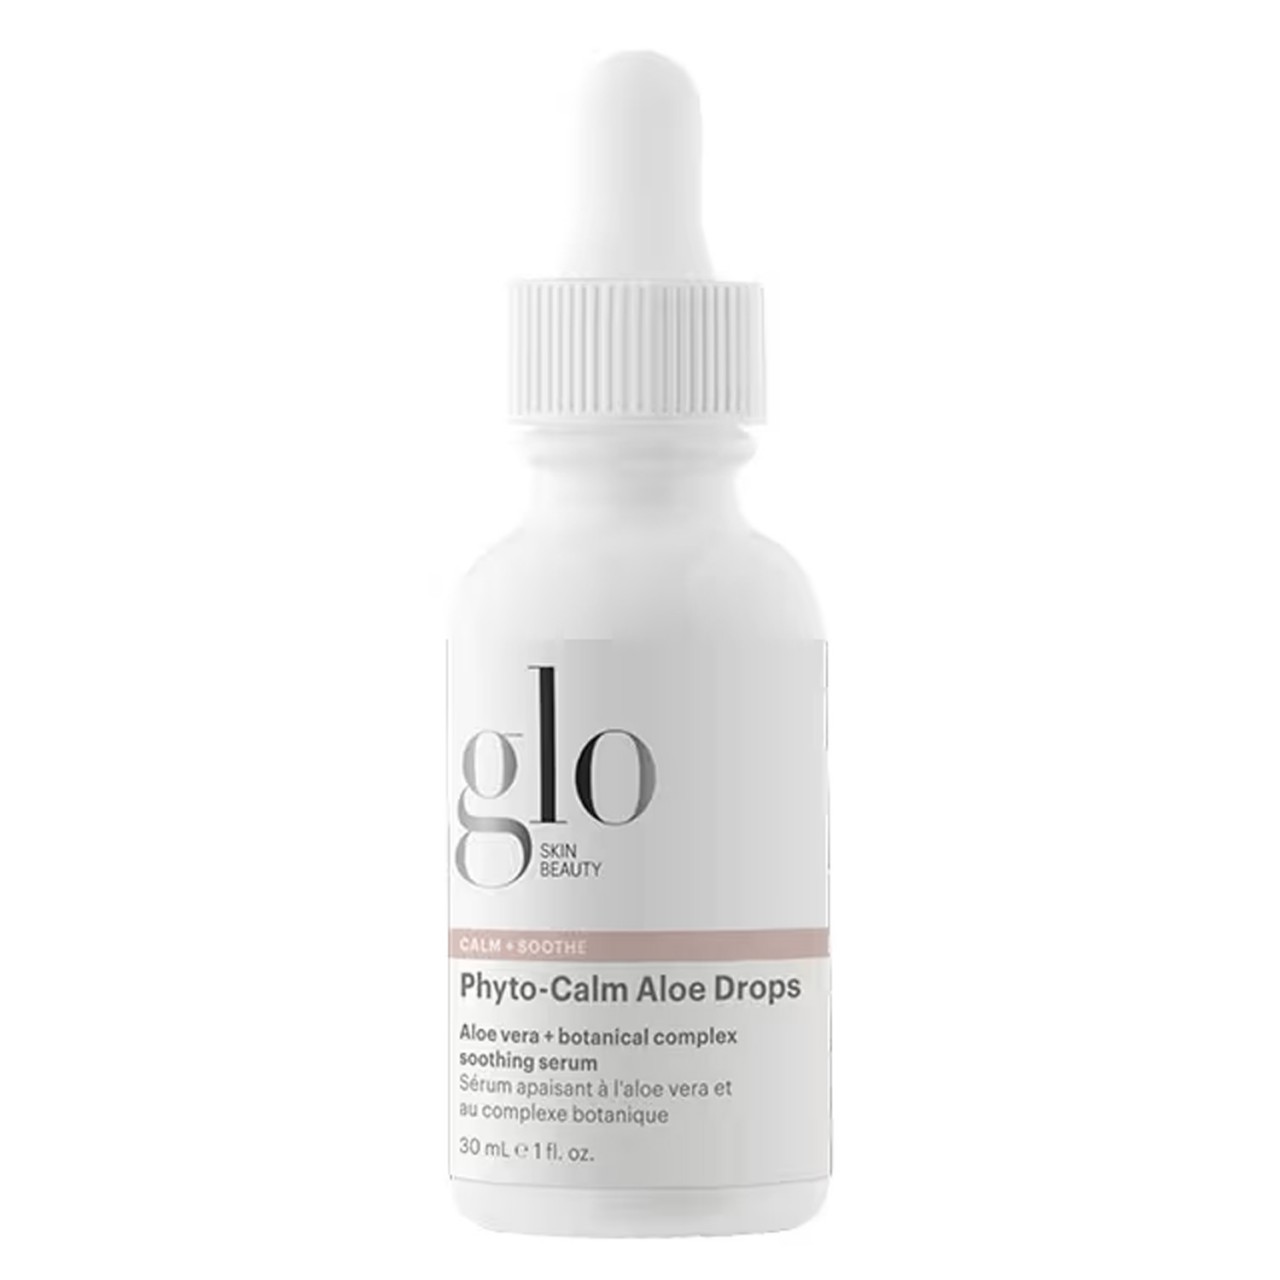 Glo Skin Beauty Care - Phyto-Calm Aloe Drops von Glo Skin Beauty